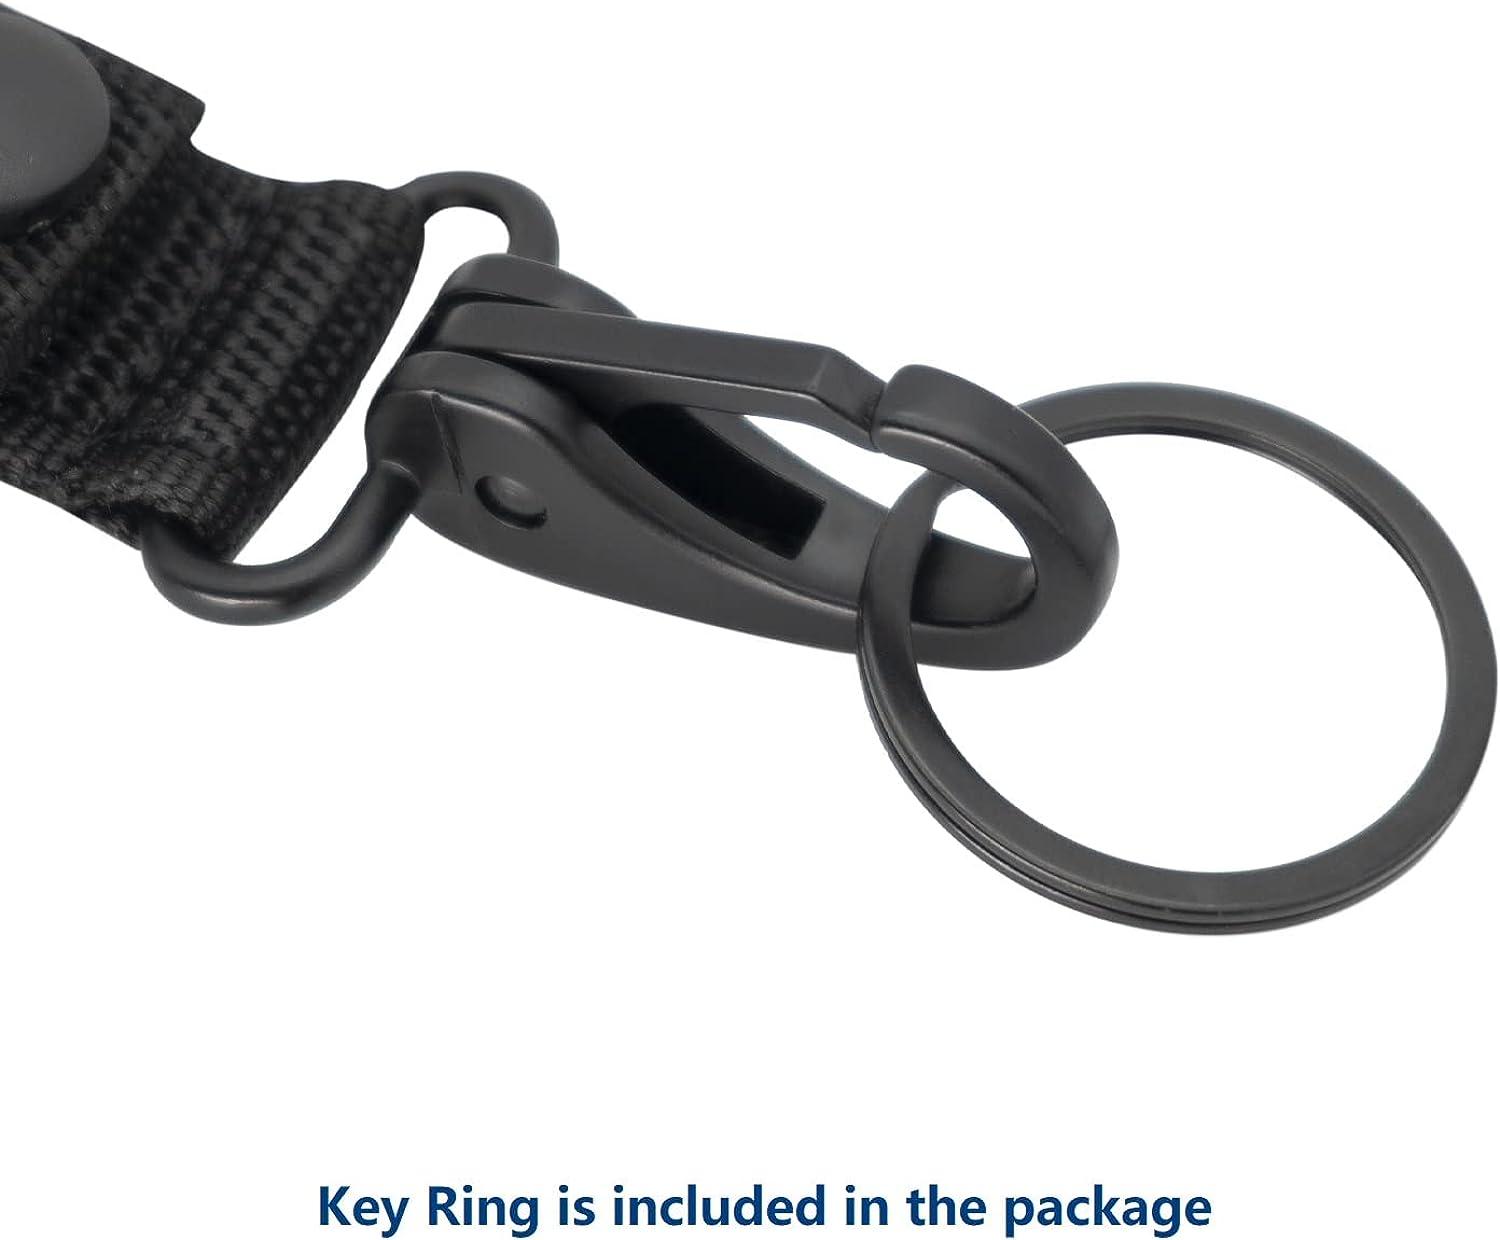 Dotacty Heavy Duty Belt Keeper Clip Key Holder with Nylon MOLLE